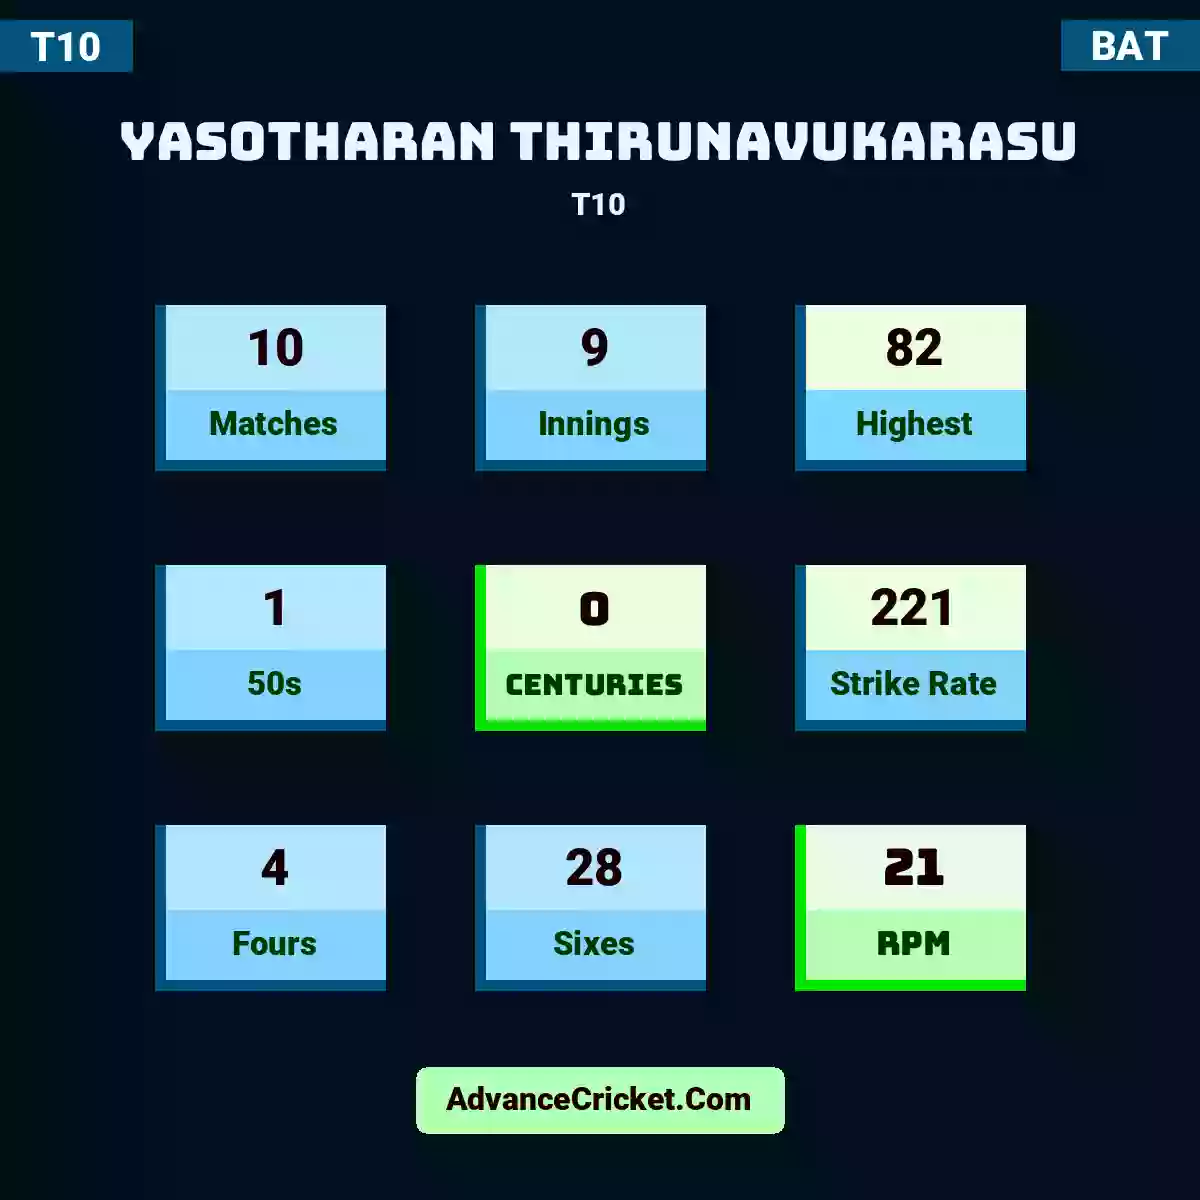 Yasotharan Thirunavukarasu T10 , Yasotharan Thirunavukarasu played 10 matches, scored 82 runs as highest, 1 half-centuries, and 0 centuries, with a strike rate of 221. Y.Thirunavukarasu hit 4 fours and 28 sixes, with an RPM of 21.